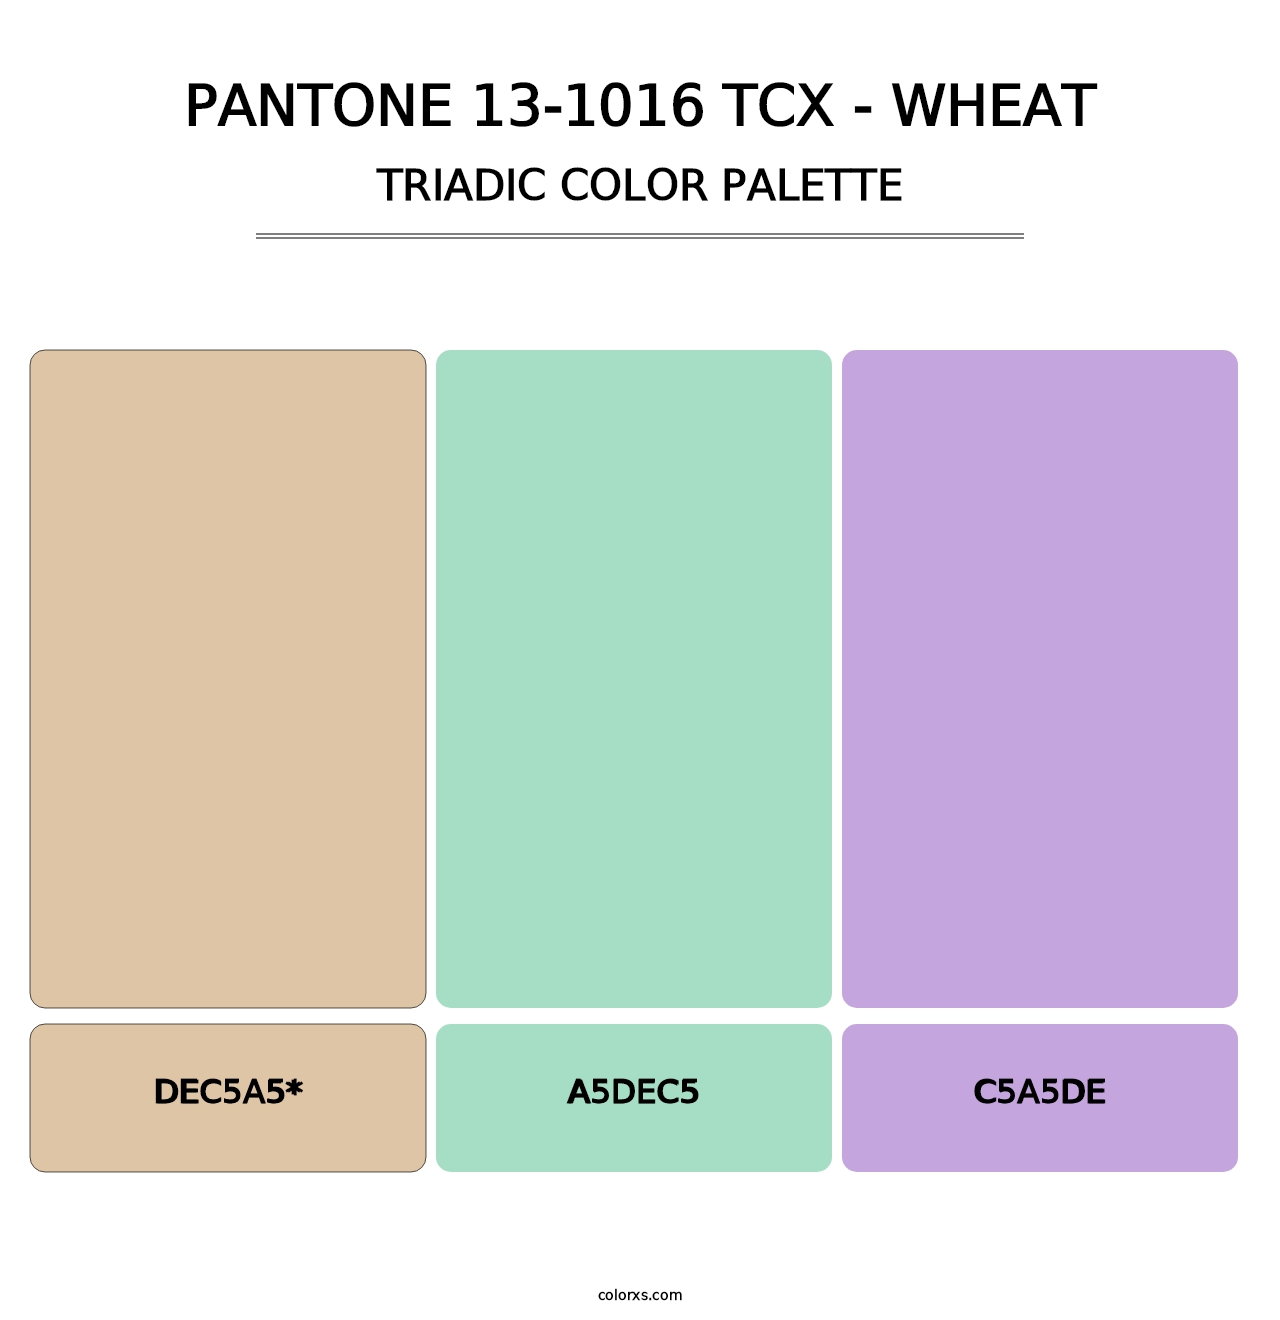 PANTONE 13-1016 TCX - Wheat - Triadic Color Palette